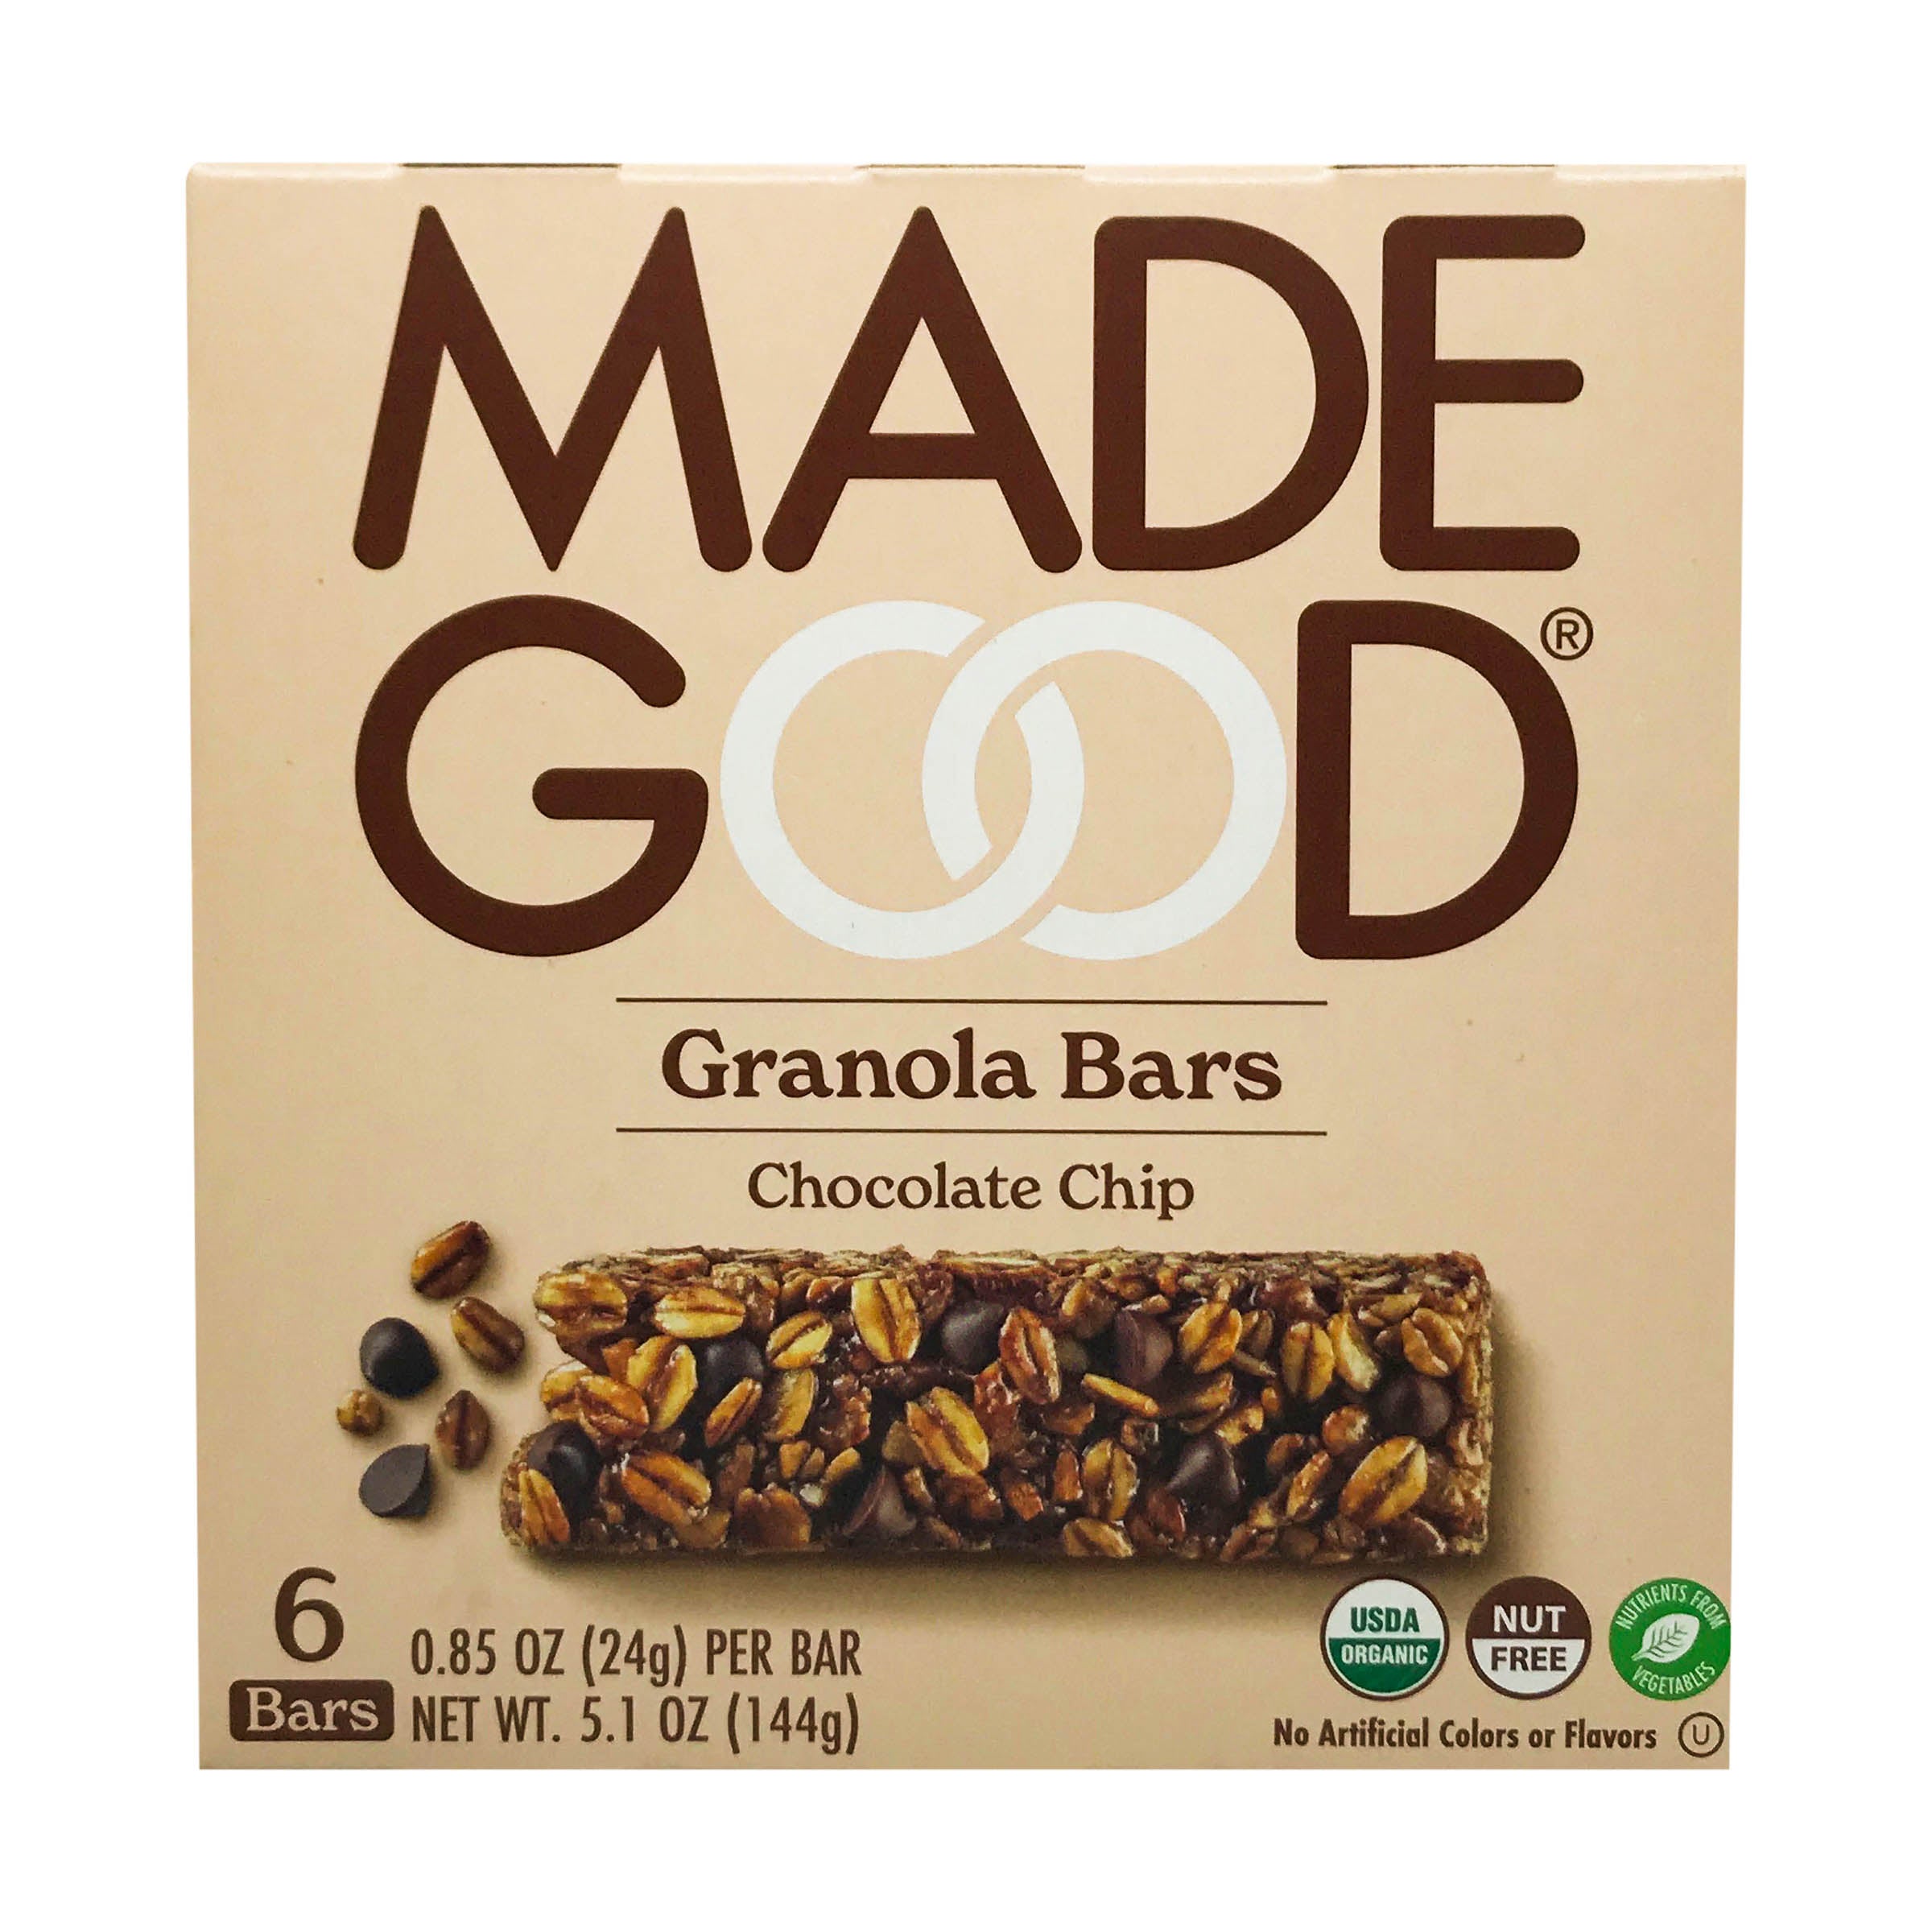 MADE GOOD Organic Chocolate Chip Granola Bars, 144g